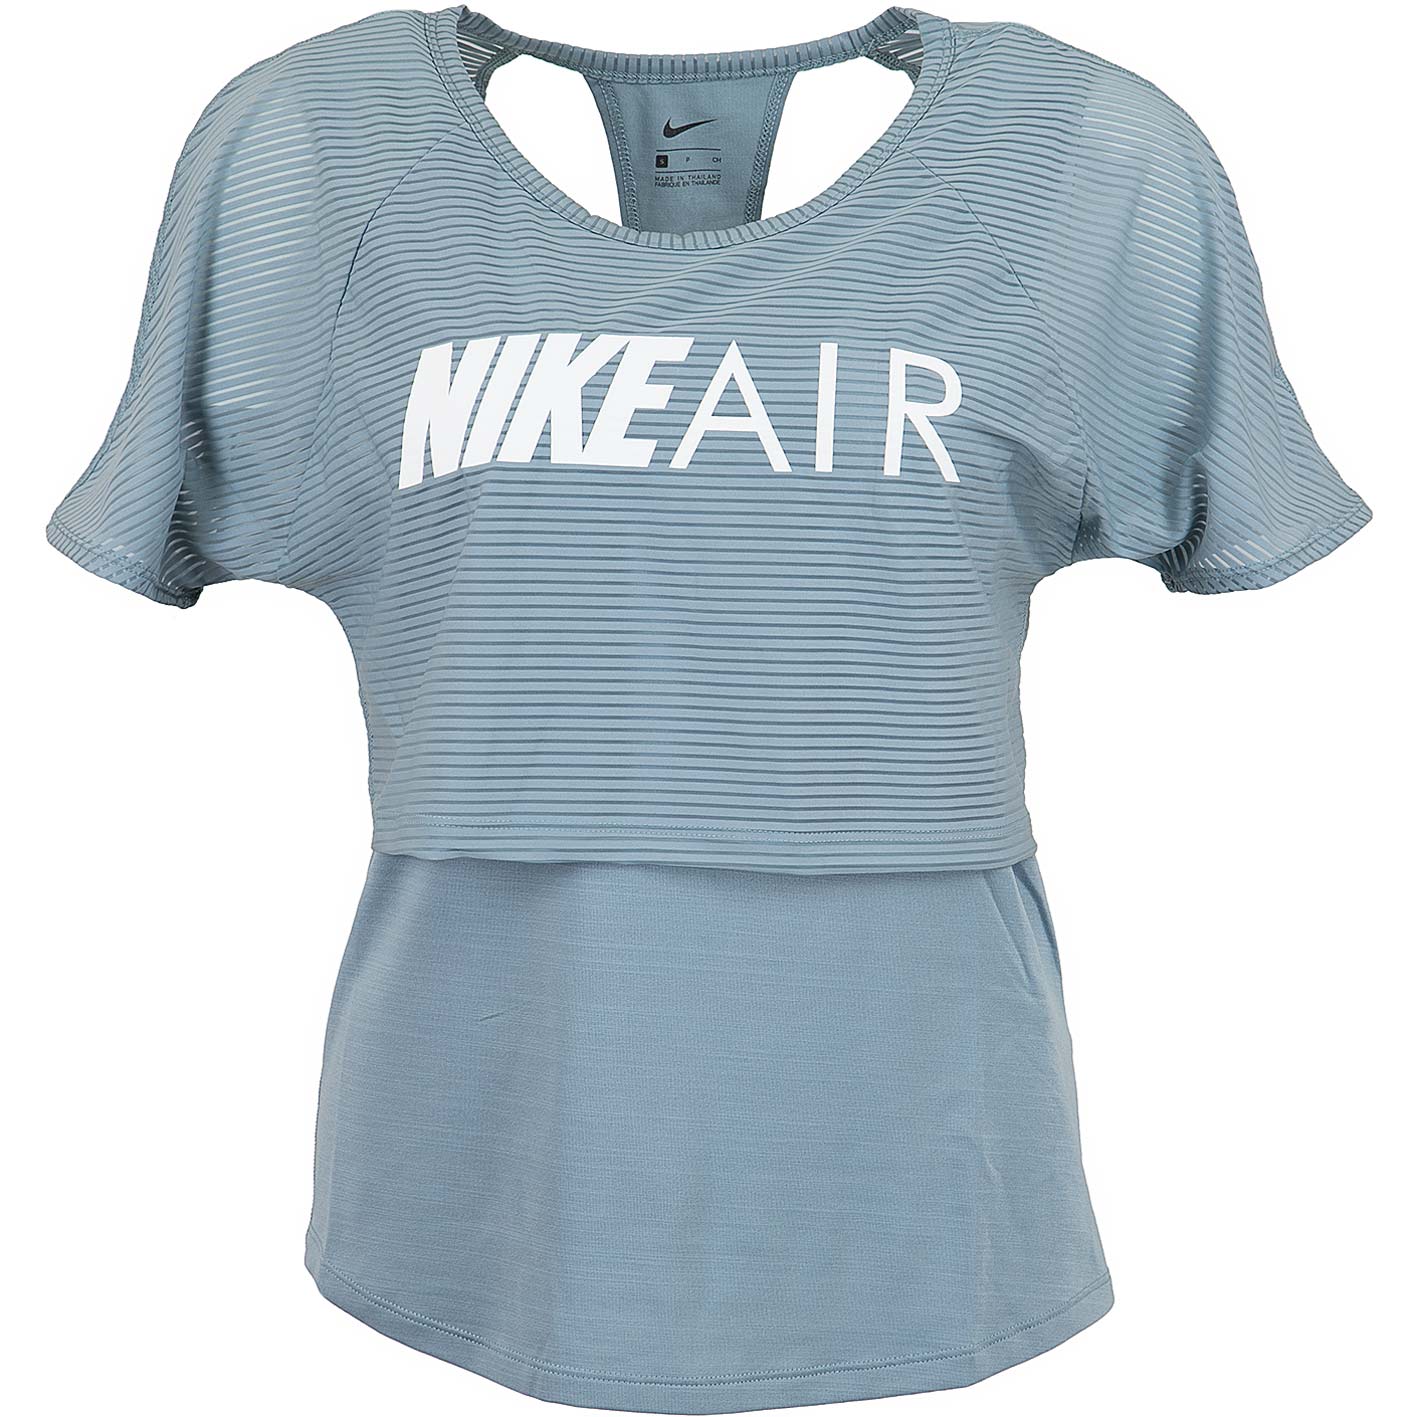 ☆ Nike Damen Laufshirt Air GX grau/weiß - hier bestellen!